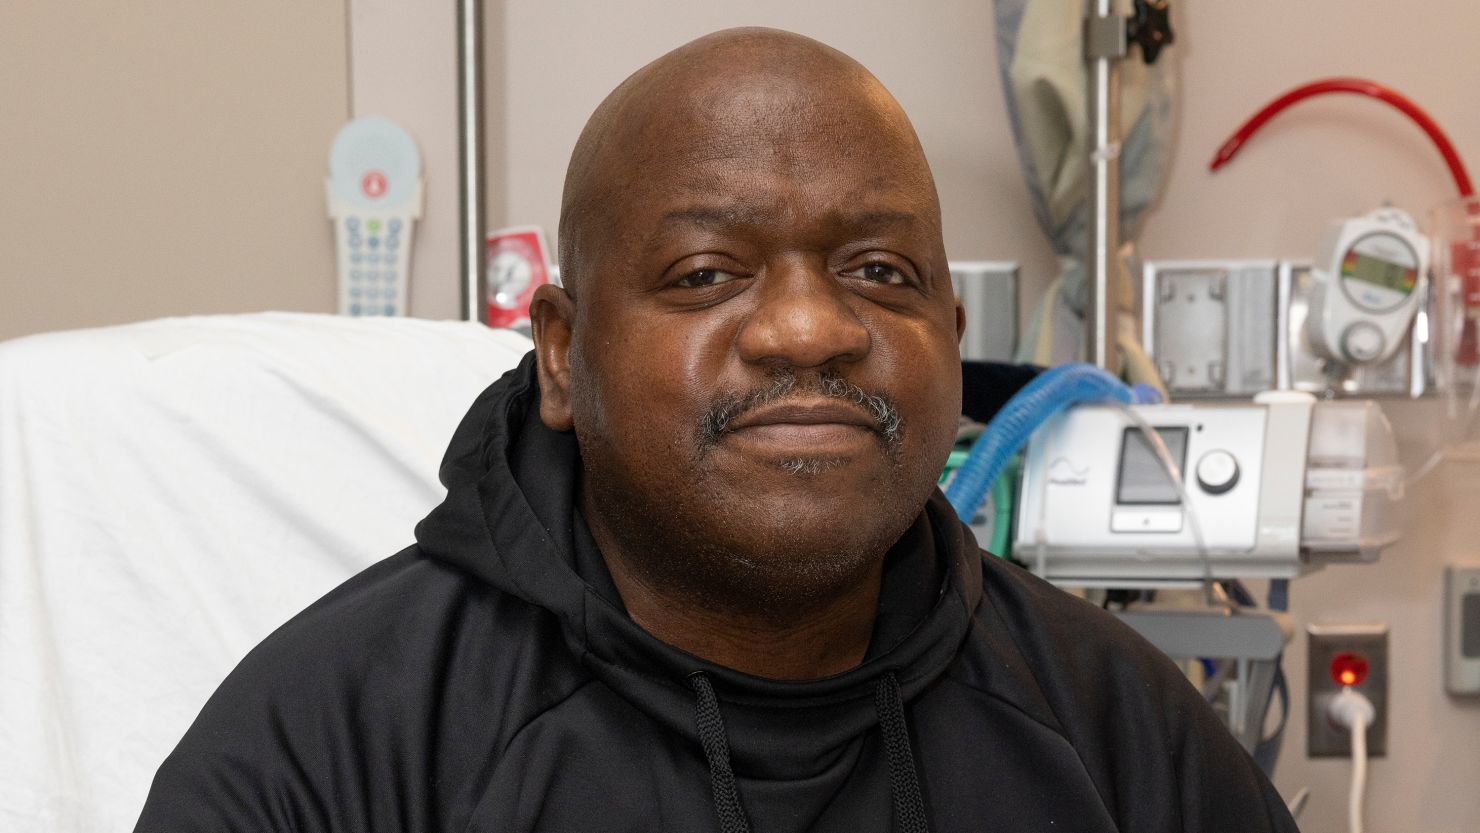 Rick Slayman said he hoped his transplant would provide hope to thousands.